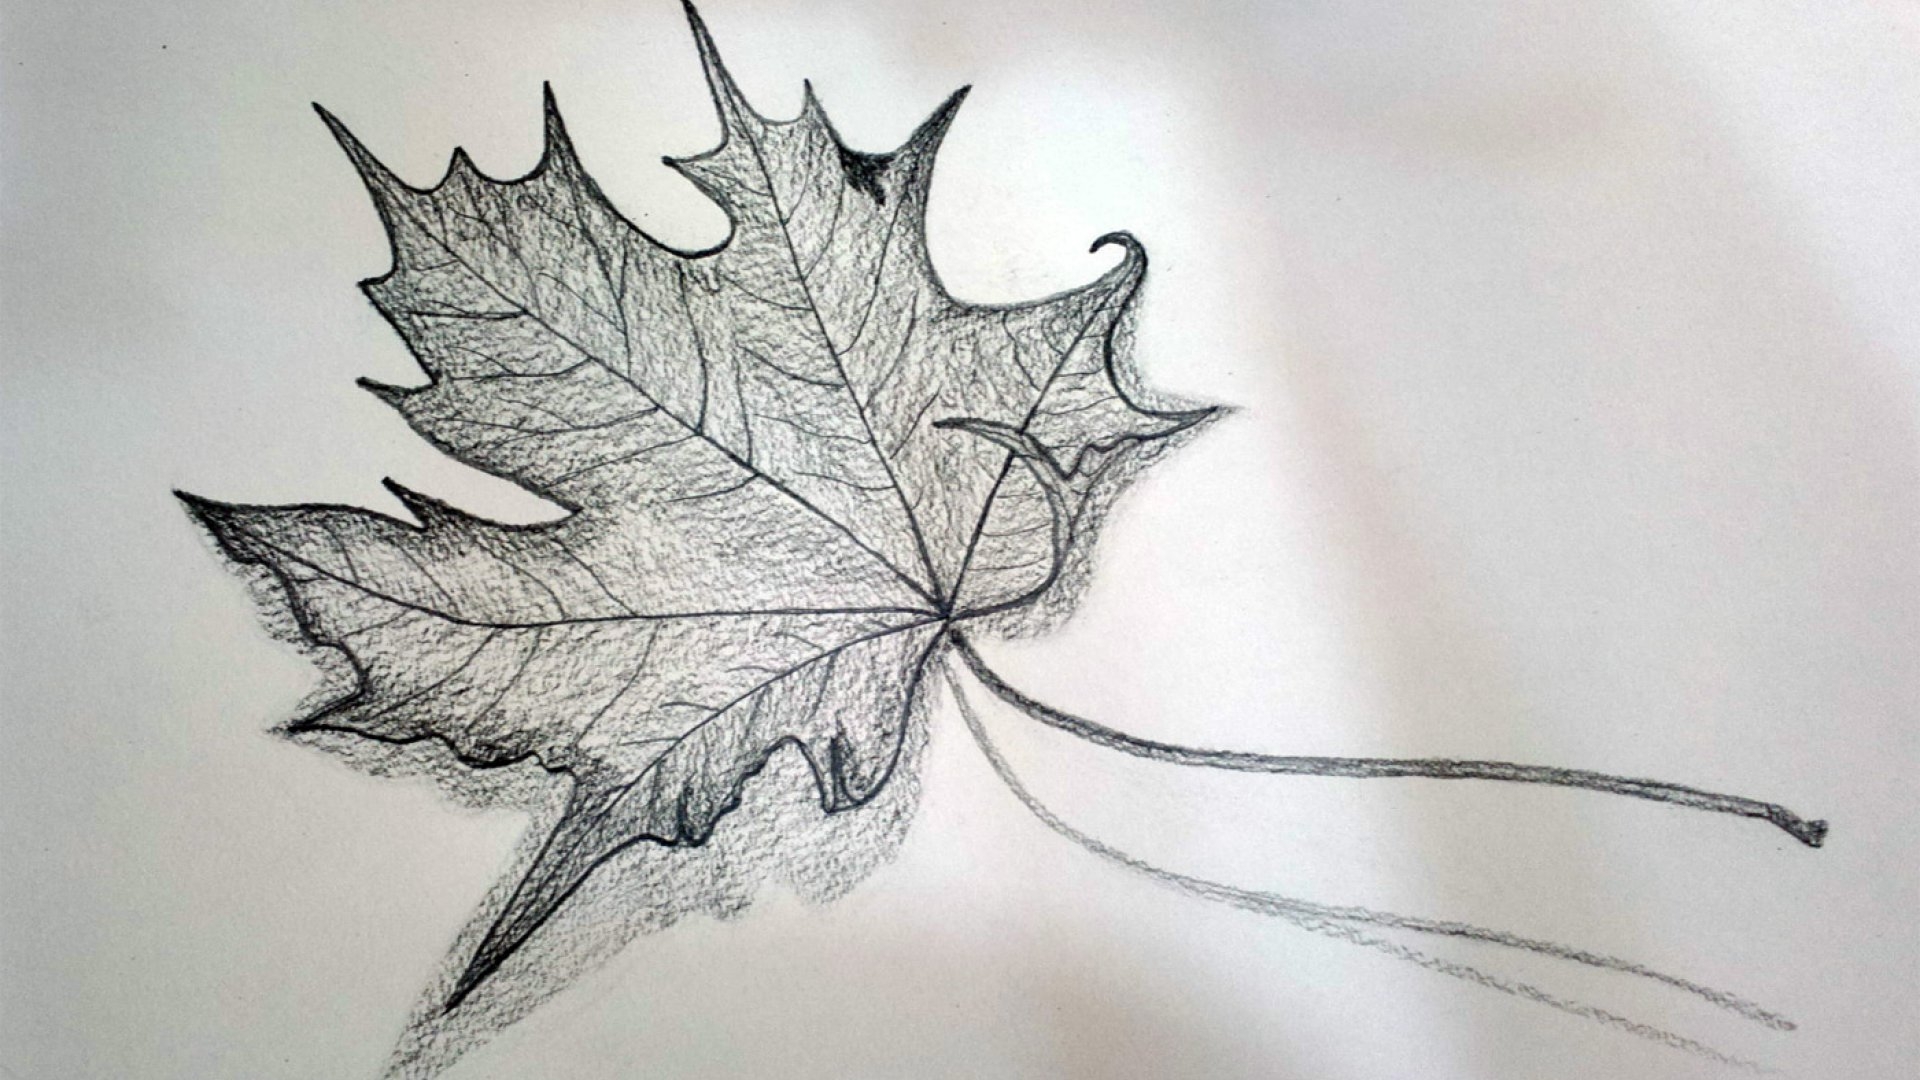 Картинка лист карандашом. Кленовый лист рисунок. Красивые листья карандашом. Кленовый лист рисунок карандашом. Лист клёна рисунок карандашом.